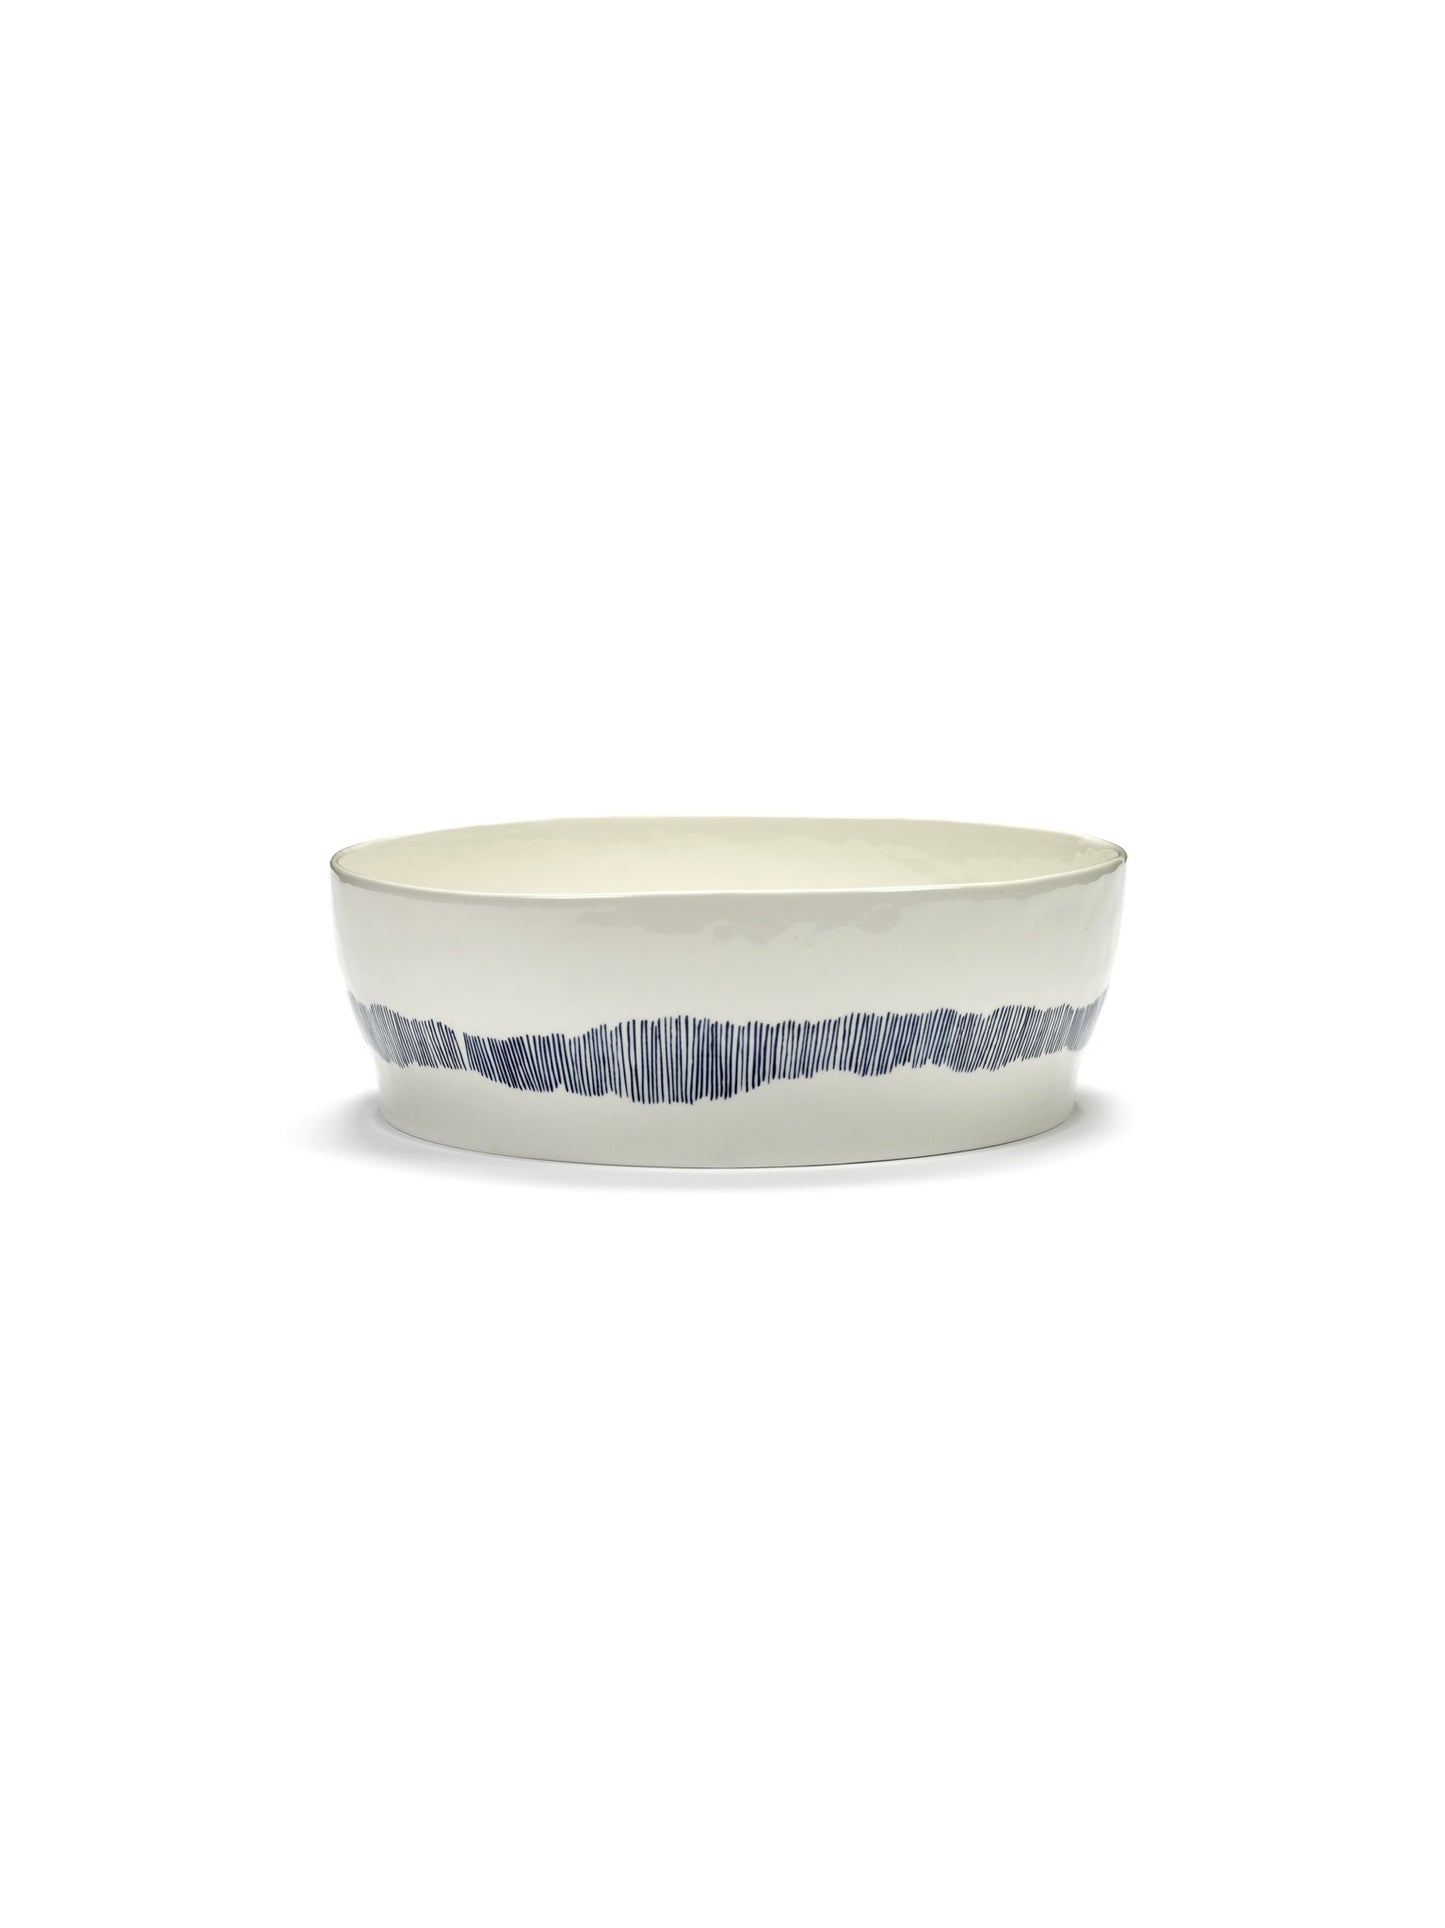 Ottolenghi Salad Bowl - White Stripes Blue